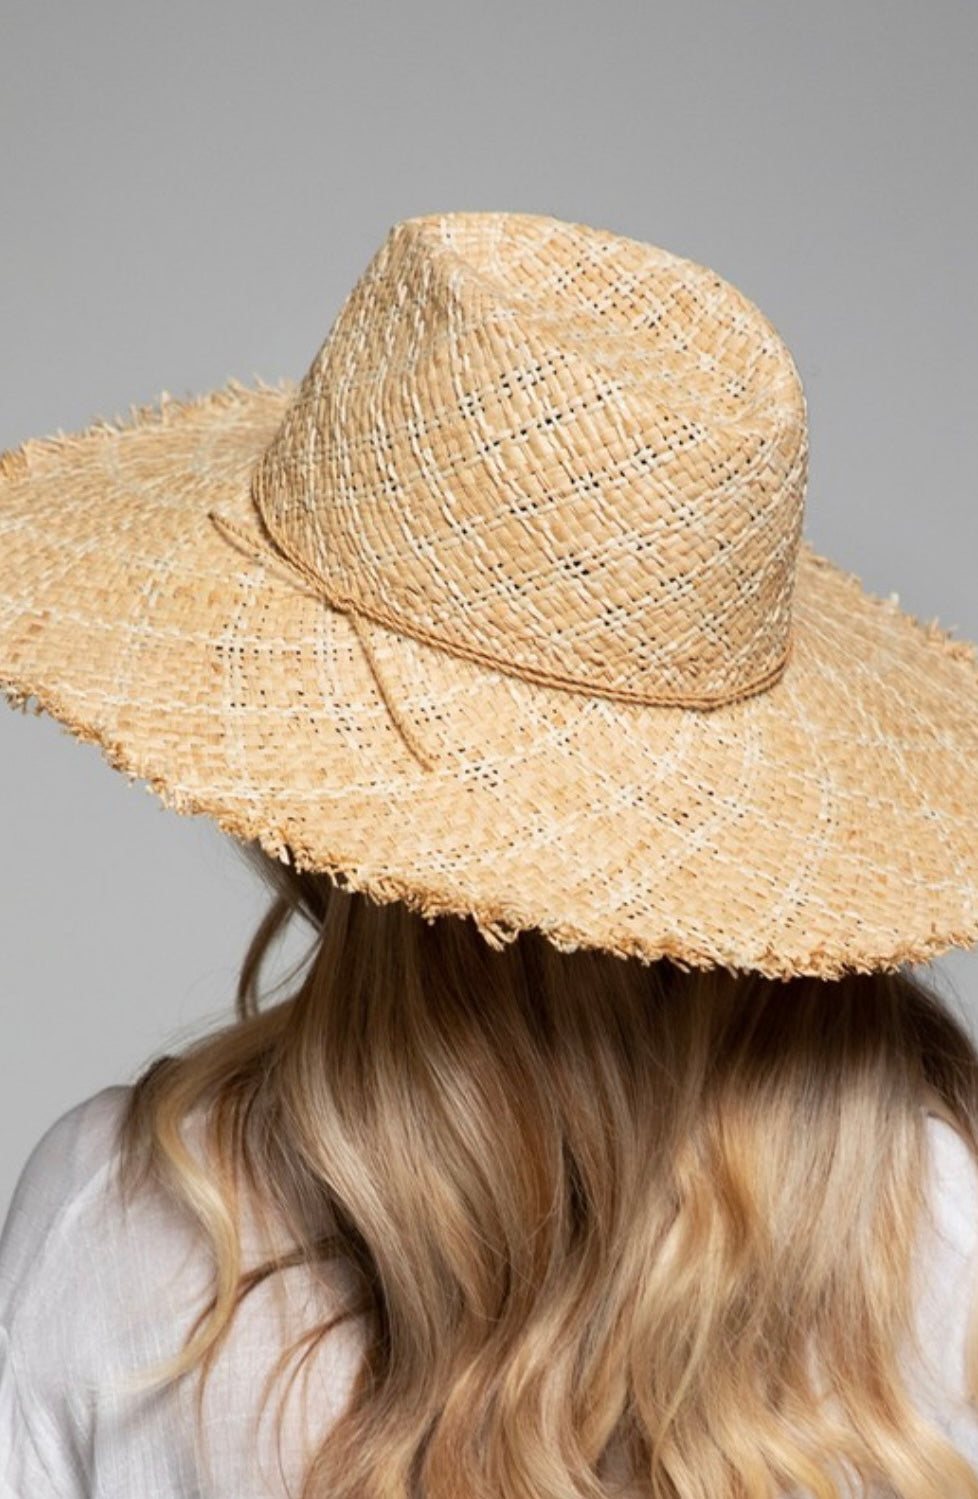 Woven Raffia Sun Hat